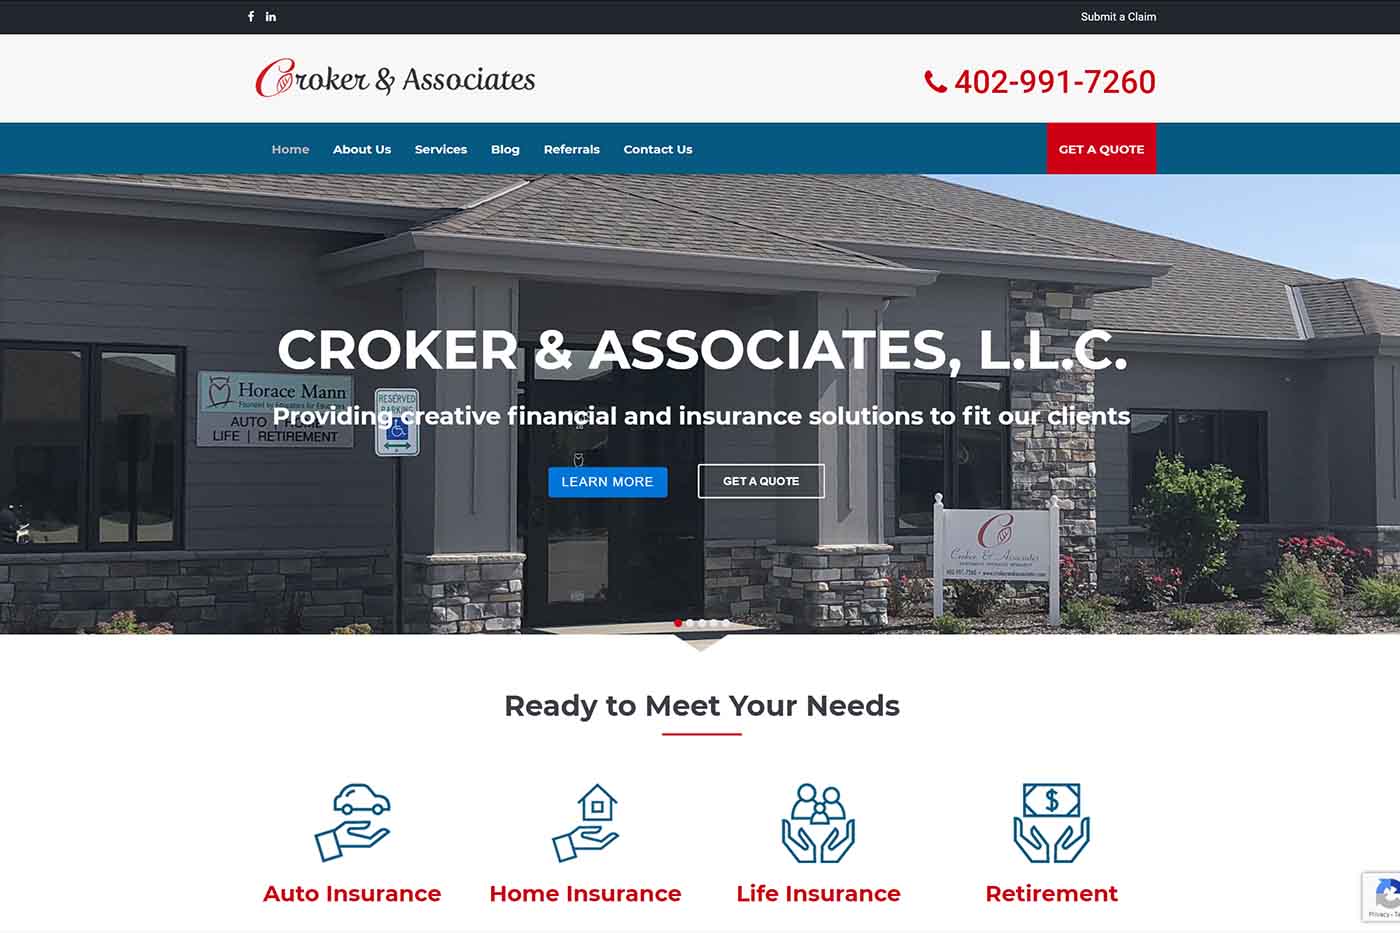 Croker & Associates